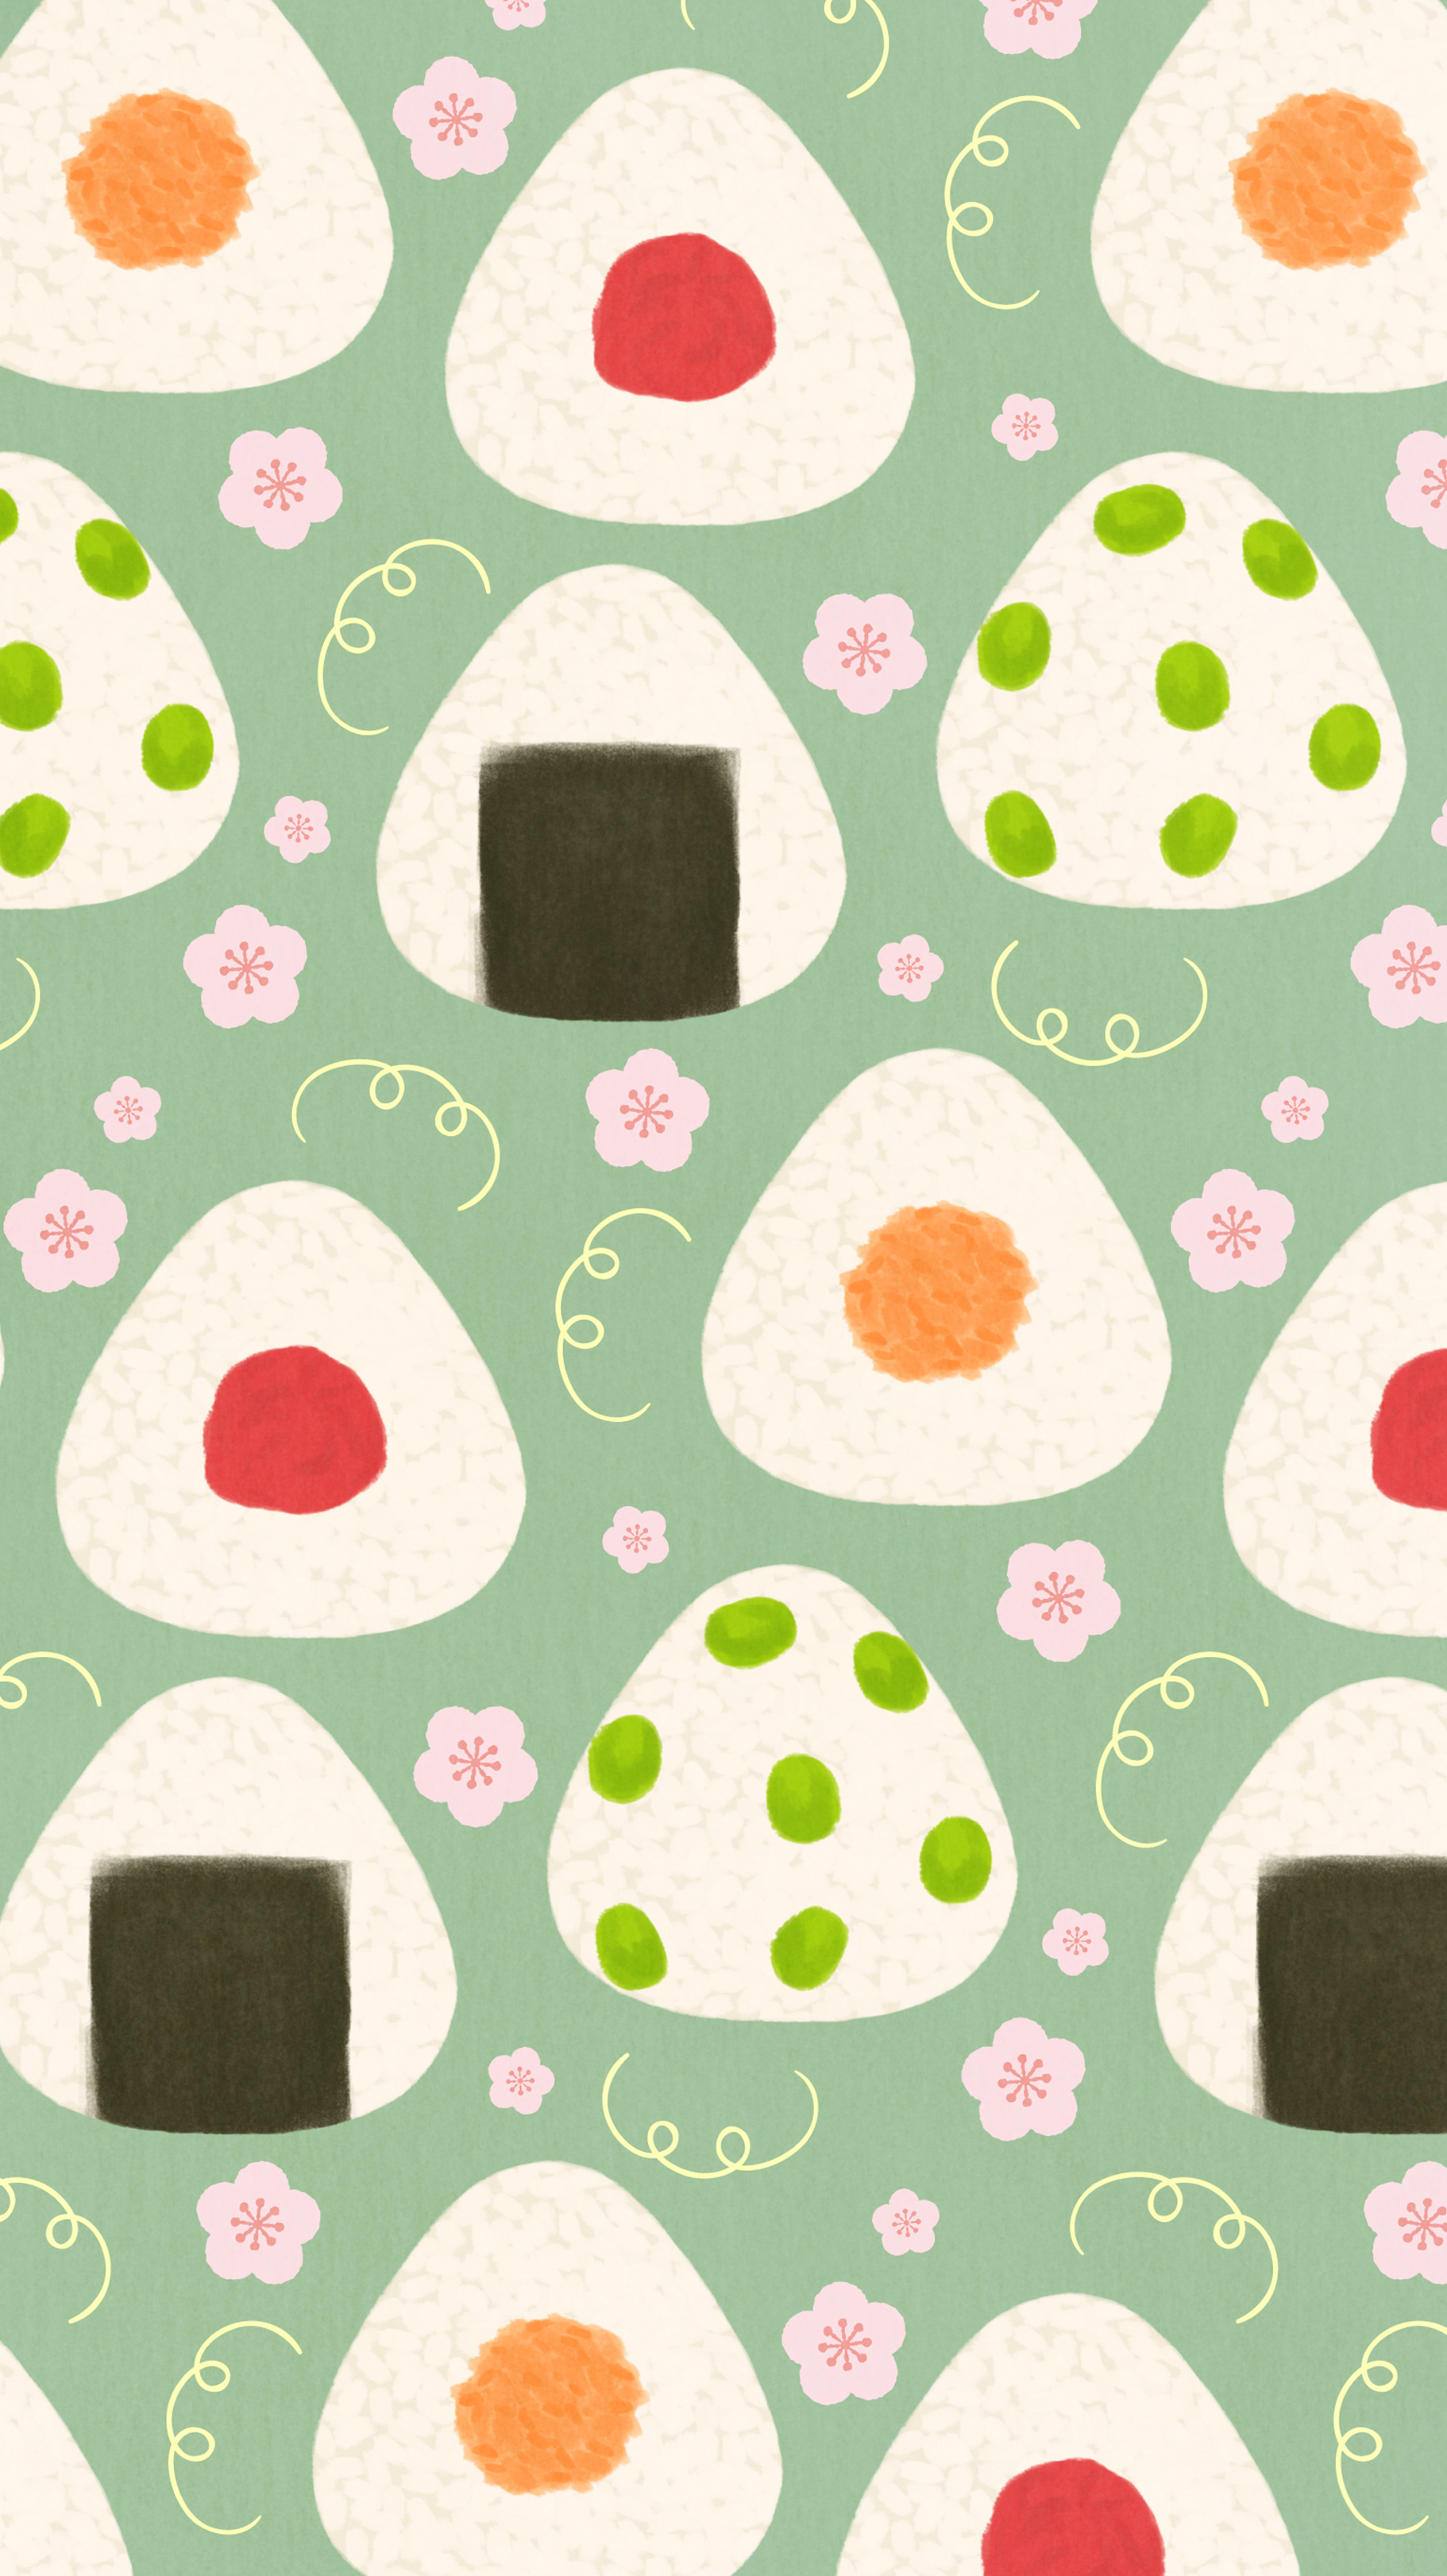 Omiyu おにぎりな壁紙 Illust Illustration 壁紙 イラスト Iphone壁紙 おにぎり 食べ物 Onigiri Riceball T Co 5s8byjimva Twitter